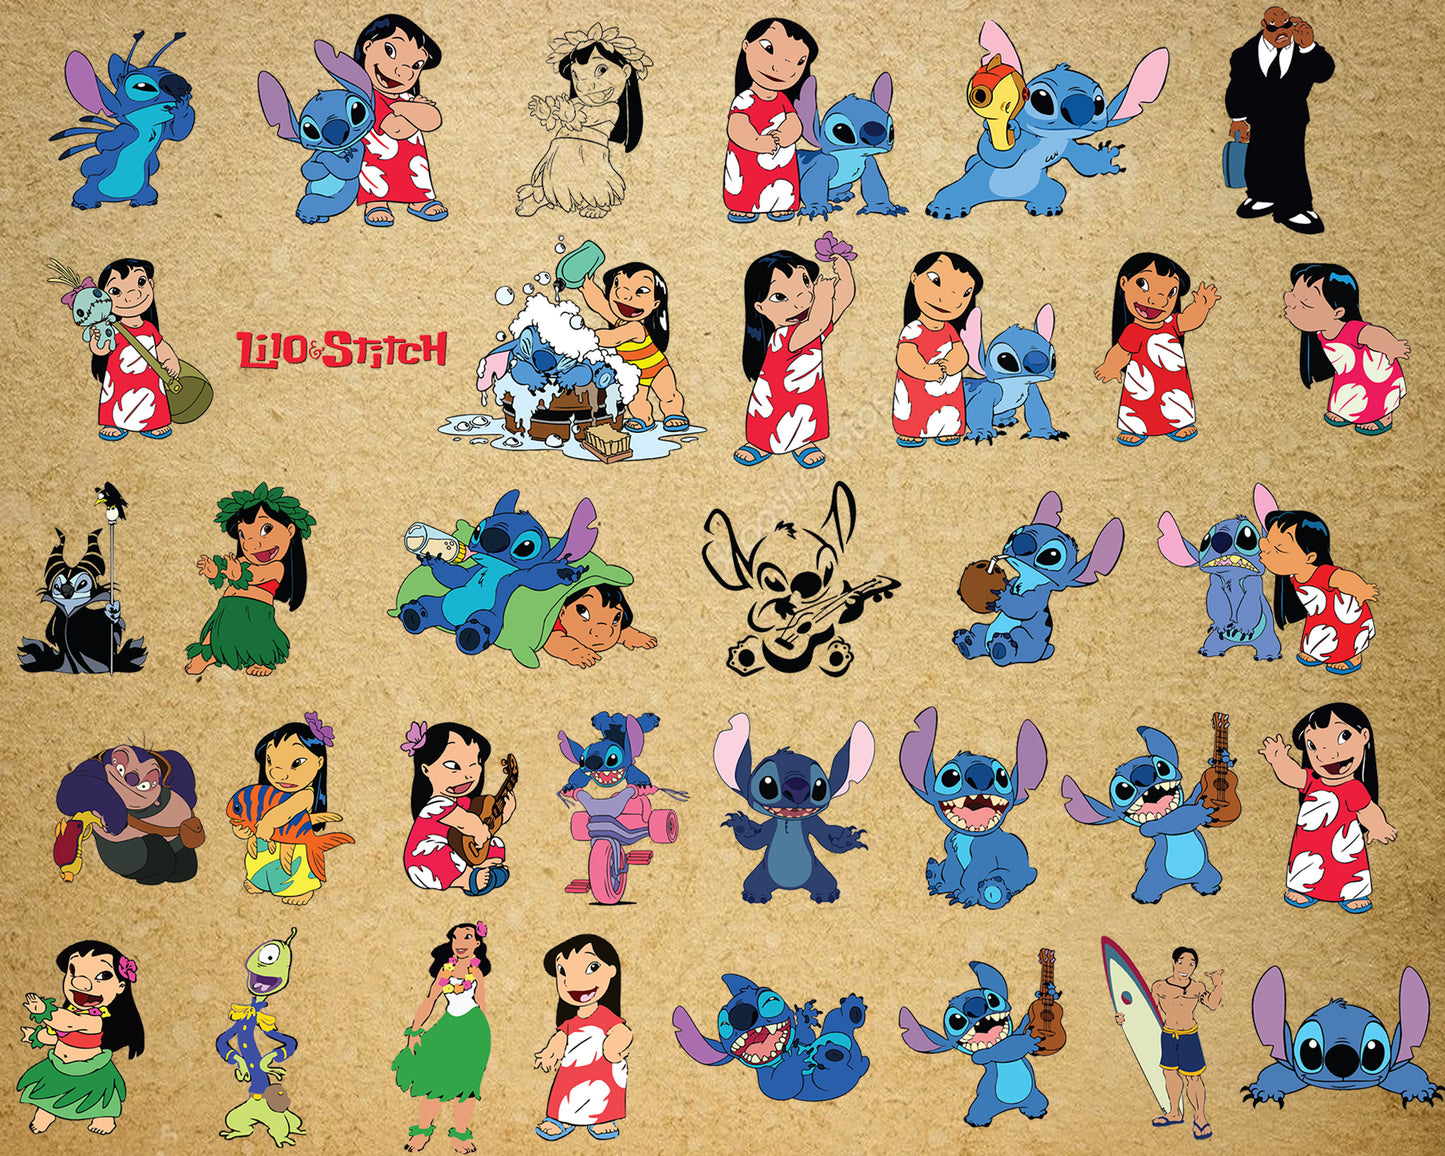 1350+ file Stitch Disney svg,Bundle Stitch Disney svg dxf eps png, for Cricut, Silhouette, digital, file cut